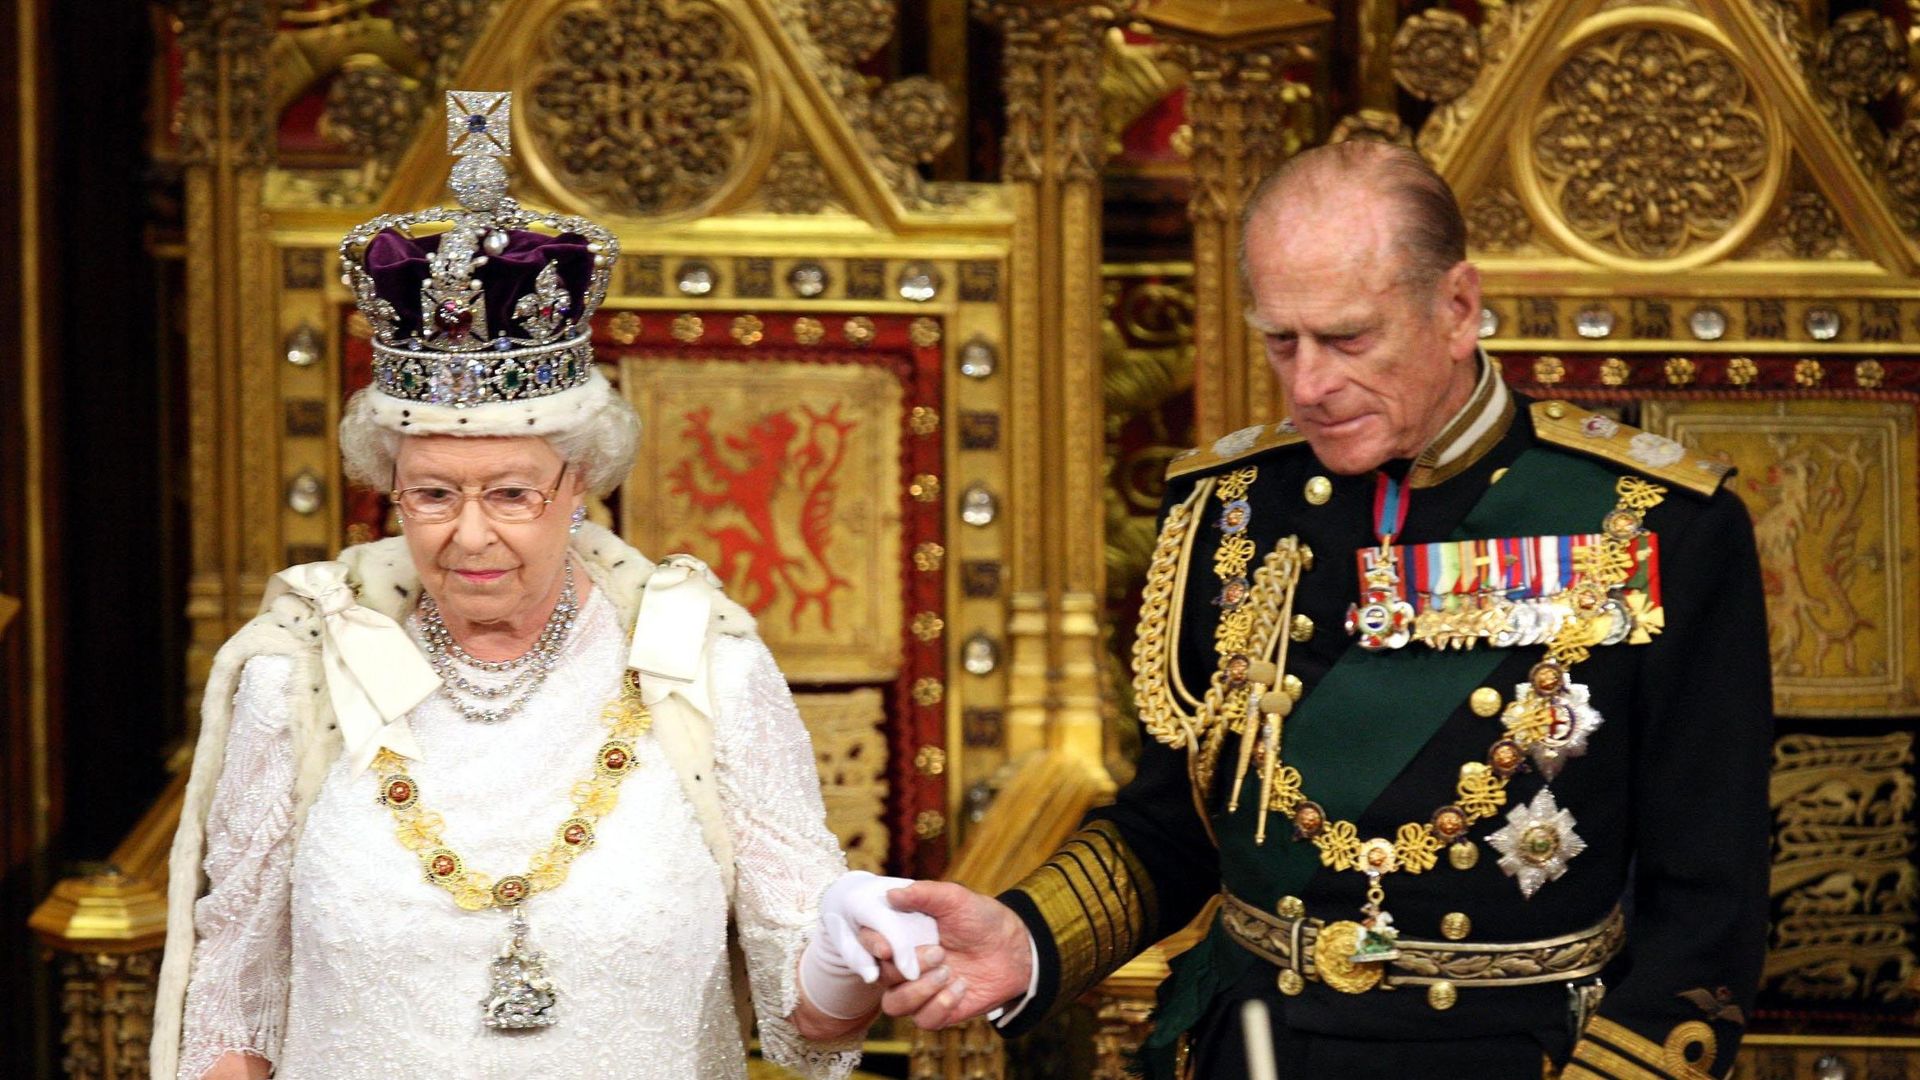 Queen Elizabeth II wearing the Imperial State Crown in 2007